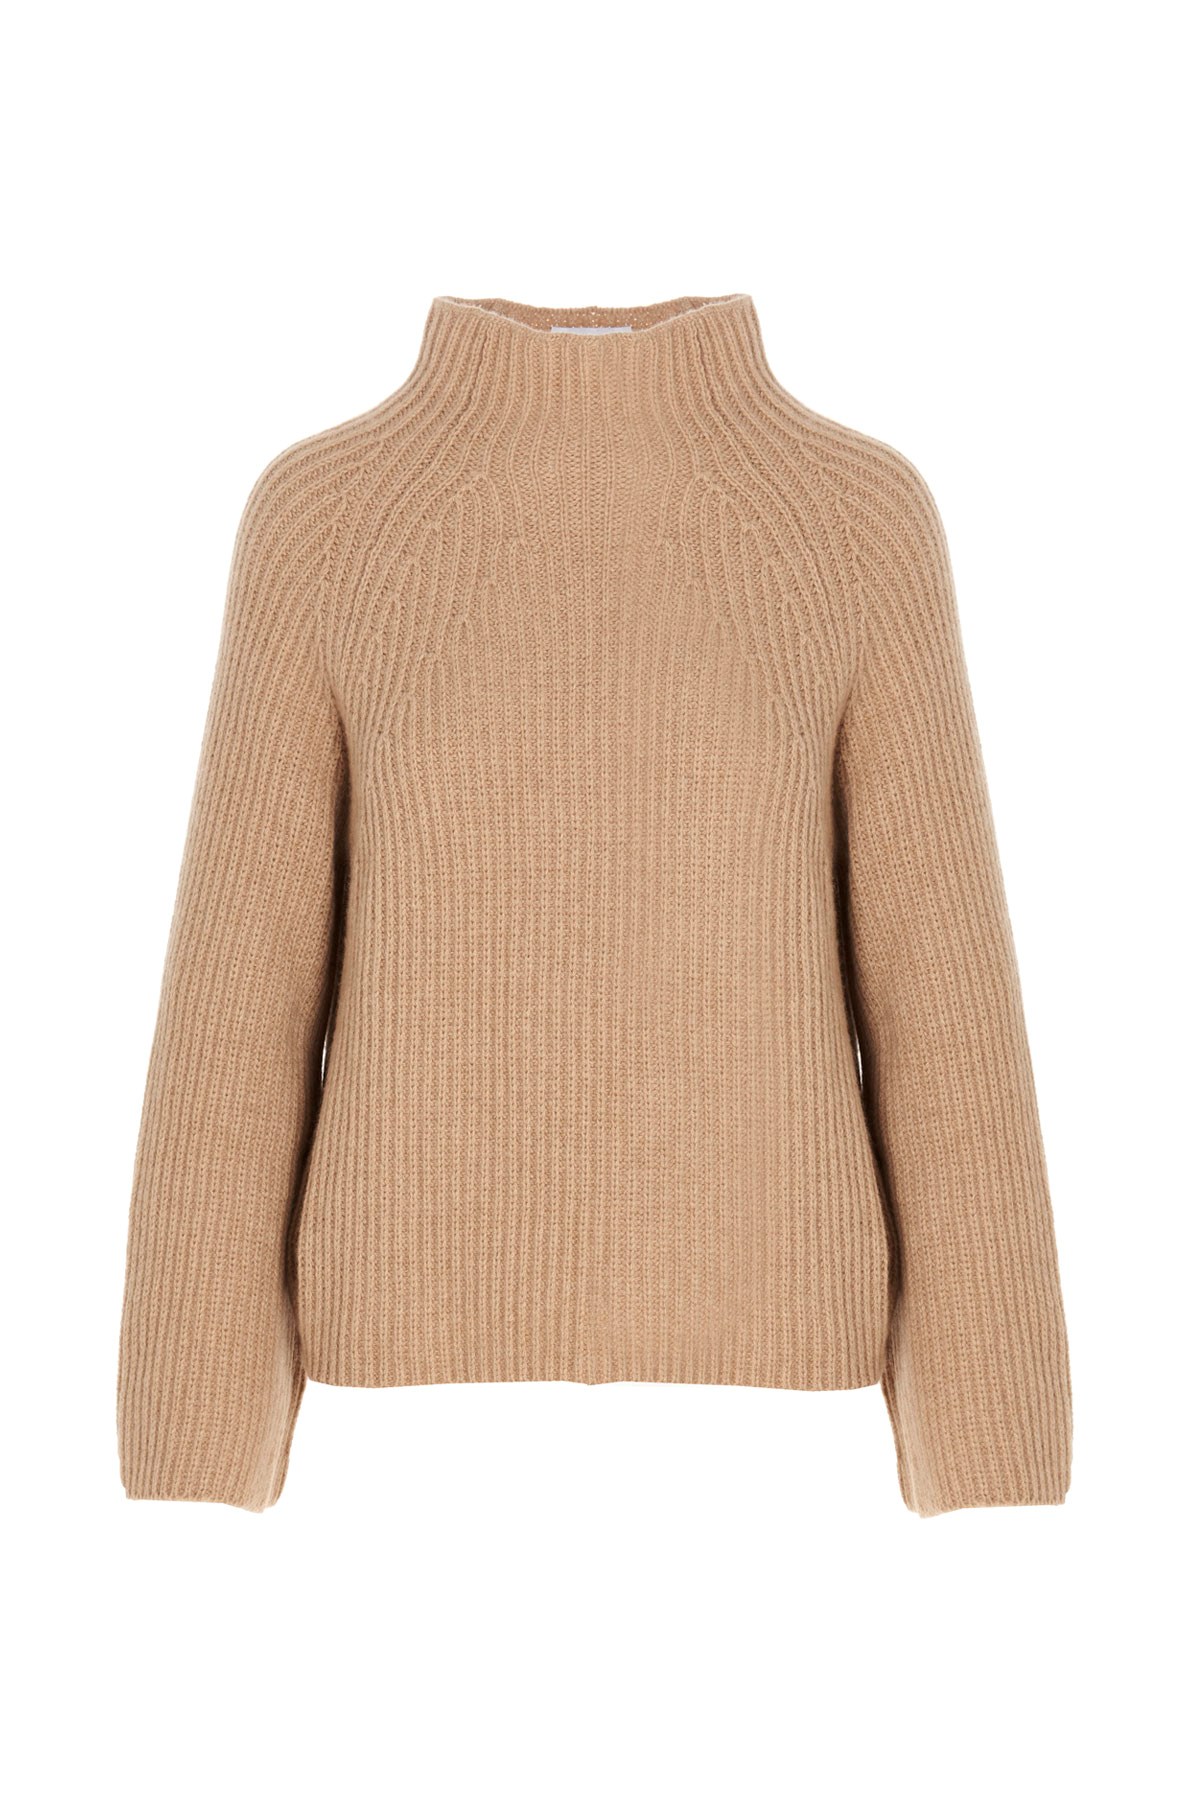 KNIIT MILANO 'Turner Eco’ Sweater